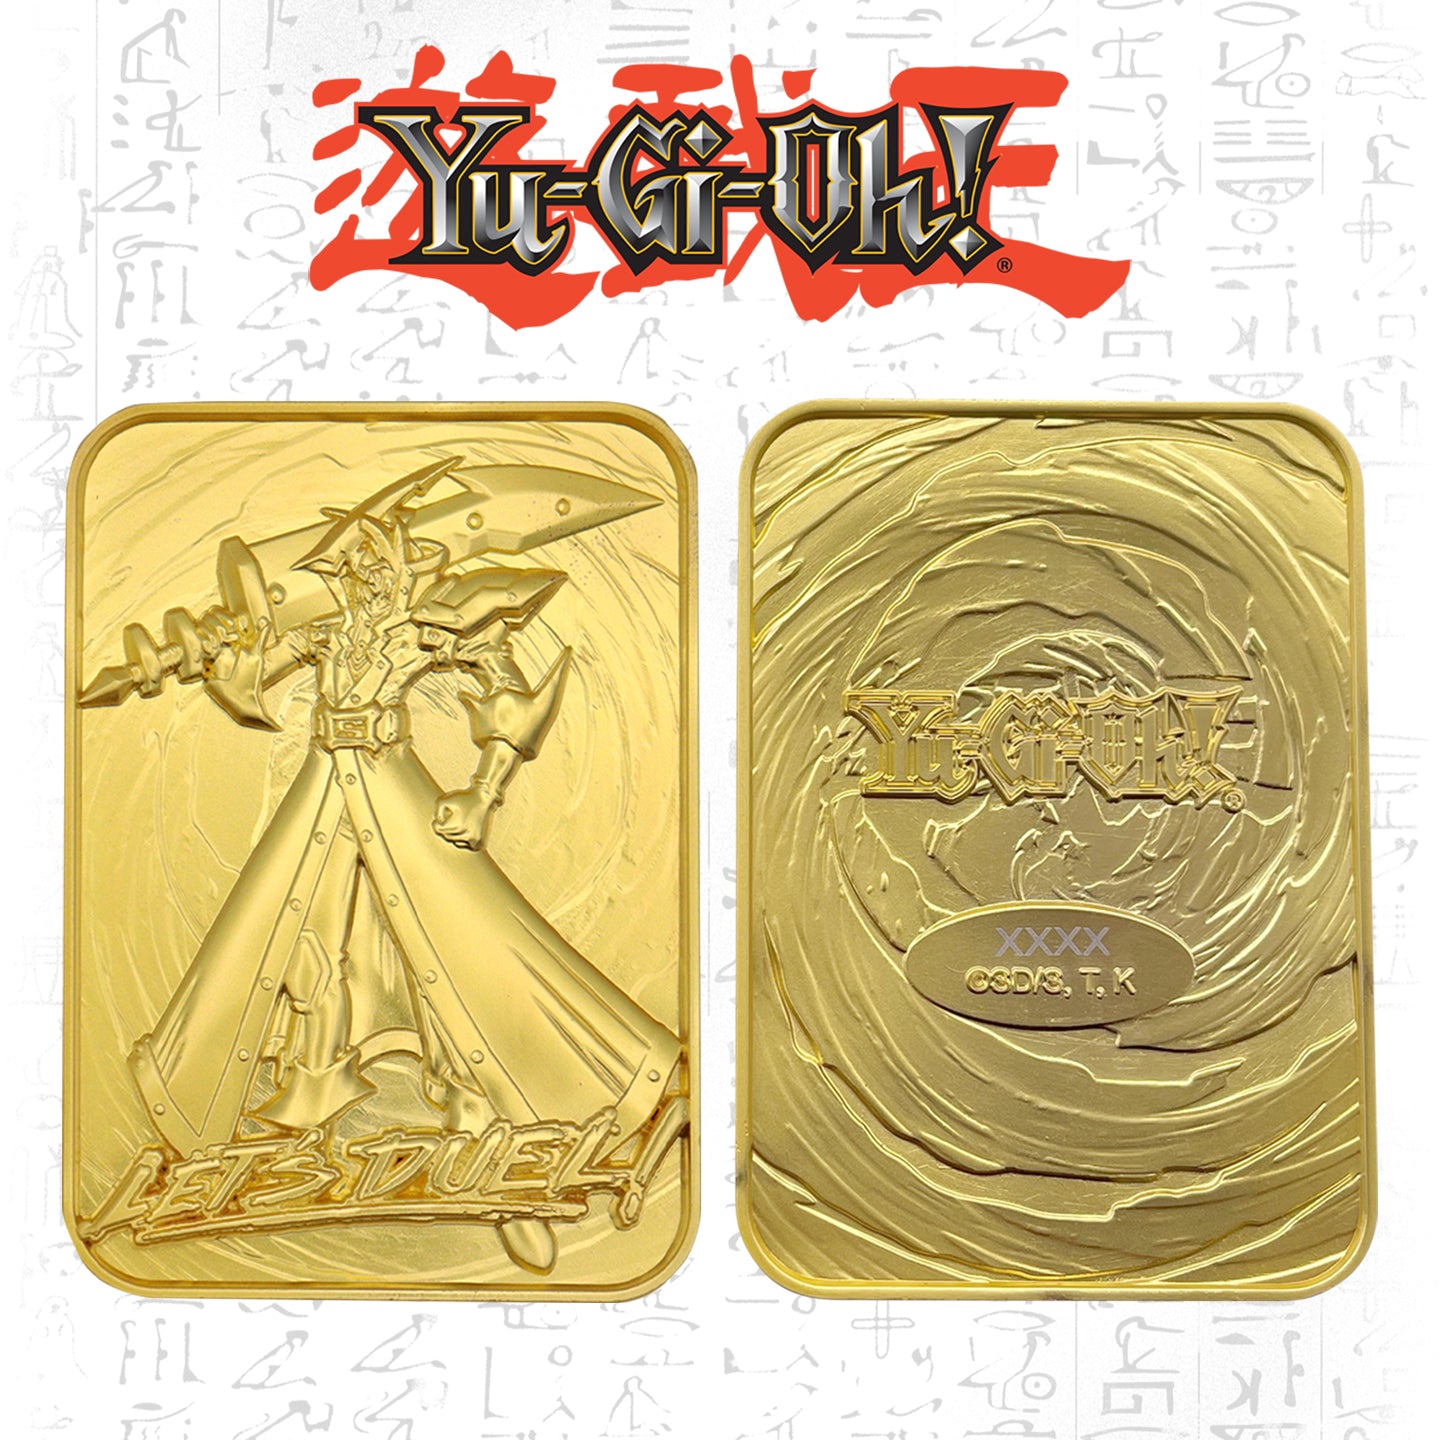 Yu-Gi-Oh! Limited Edition 24k Gold Plated Silent Swordsman Metal Card